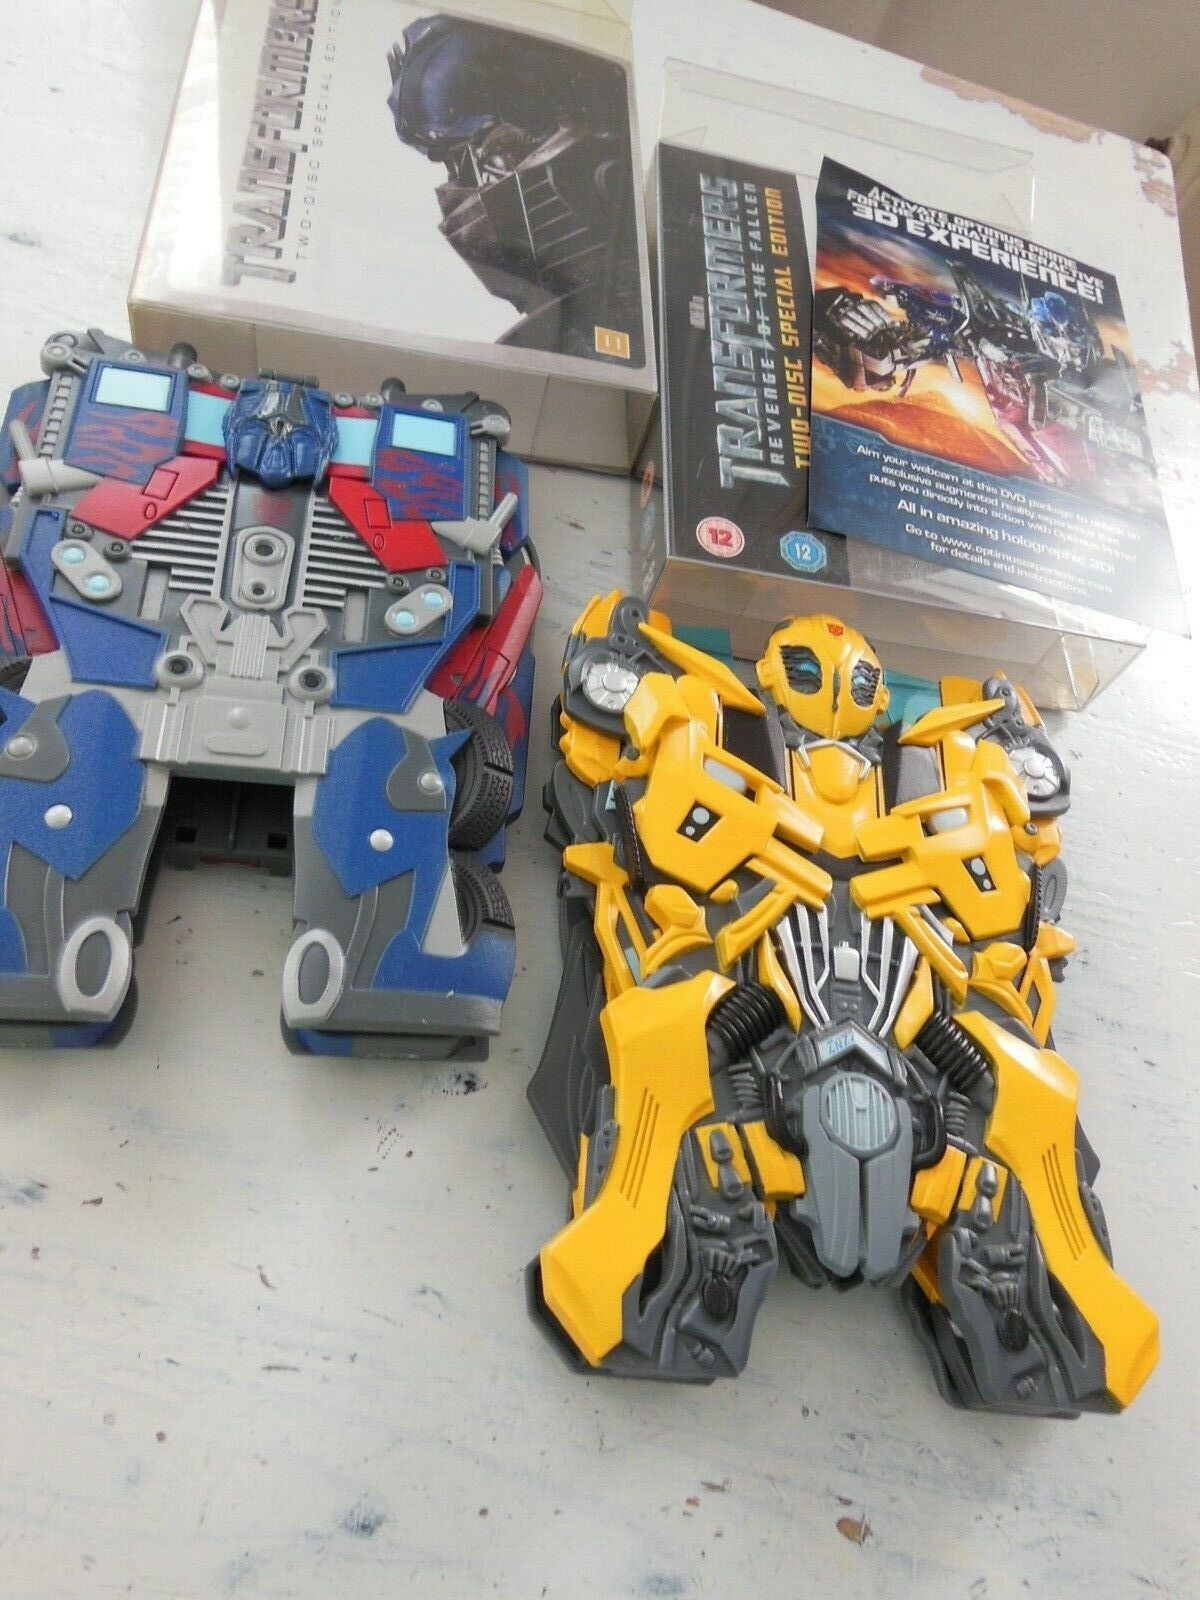 Transformers DVD Boks med Transformer ffigur, DVD,